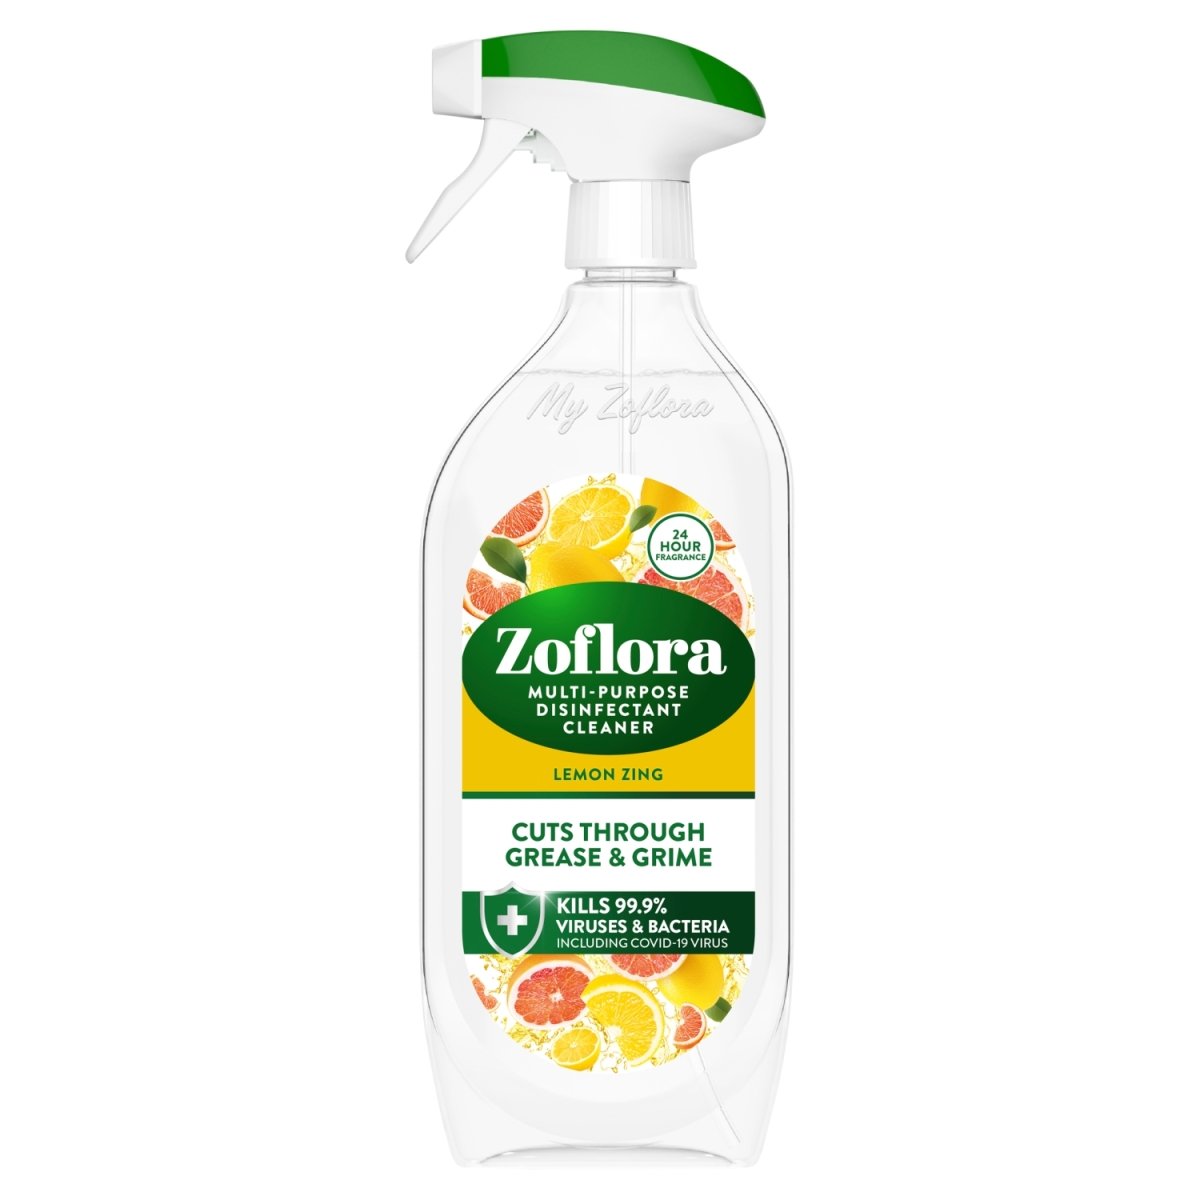 Zoflora Lemon Zing Trigger - Intamarque 5011309058215